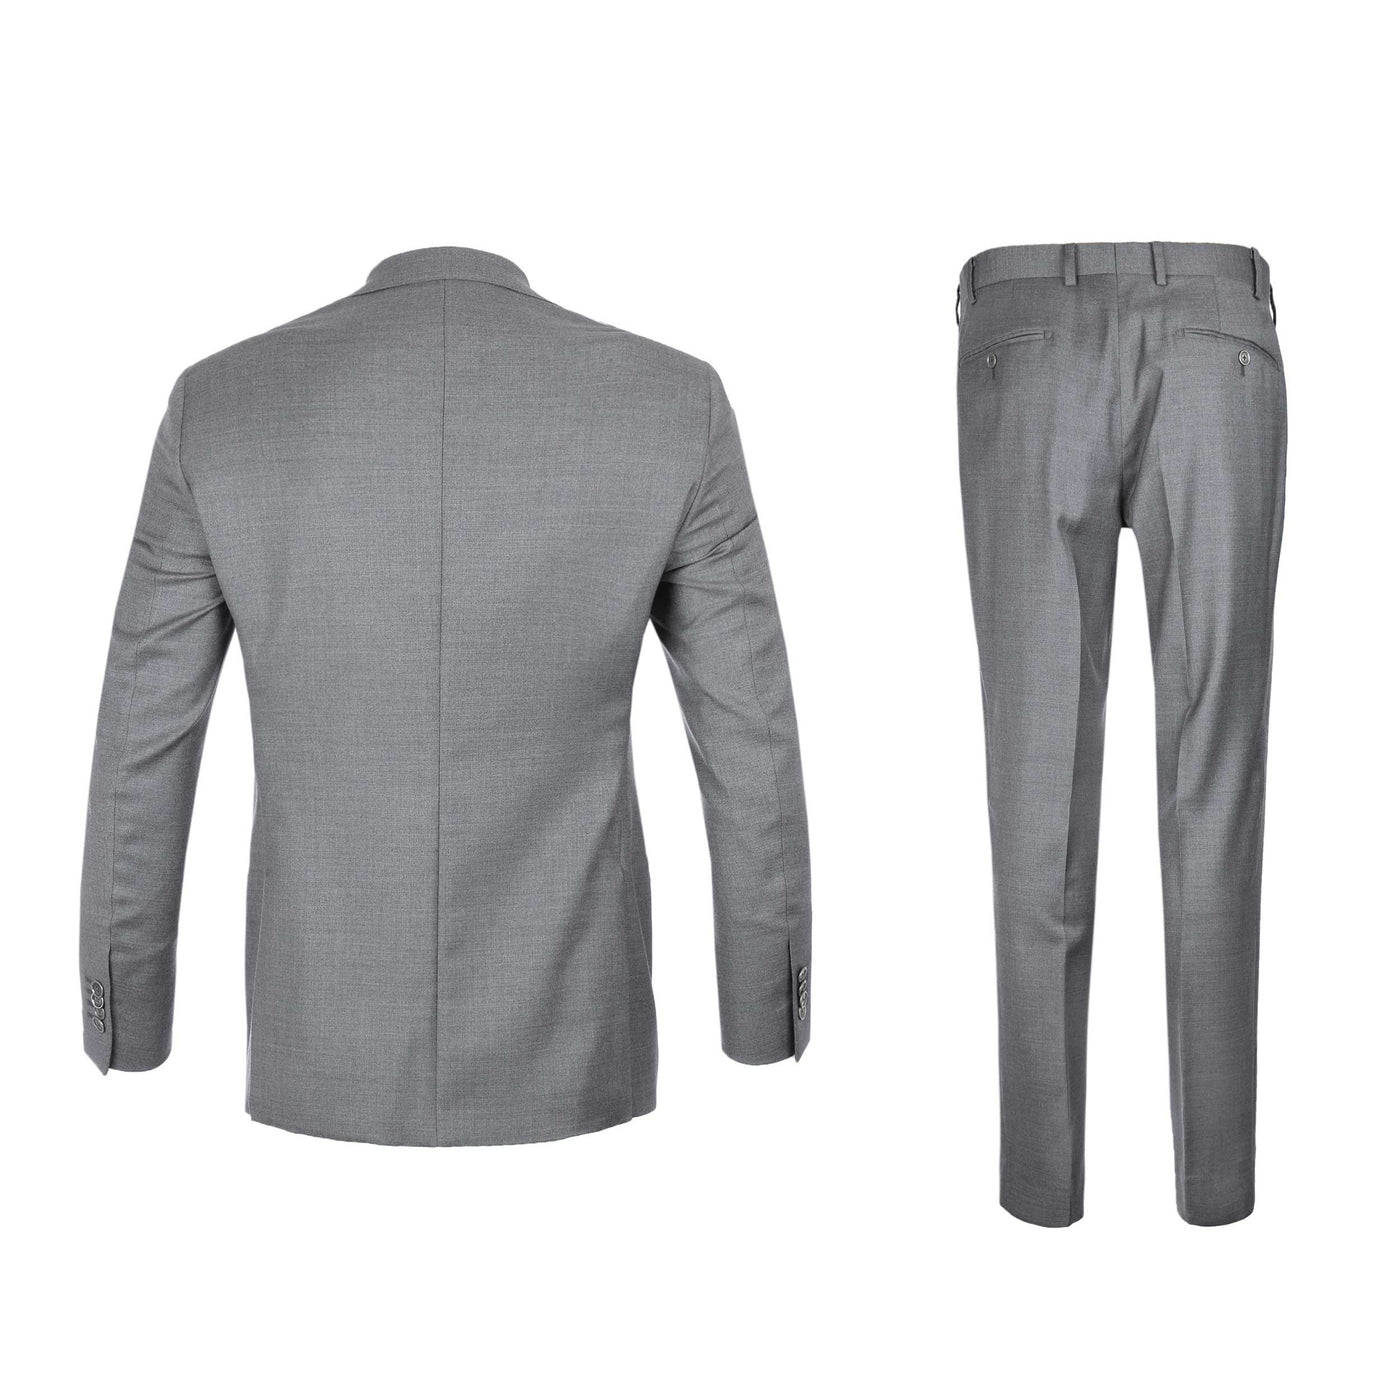 Norton Barrie Bespoke Suit in Mid Grey Lora Piana Back